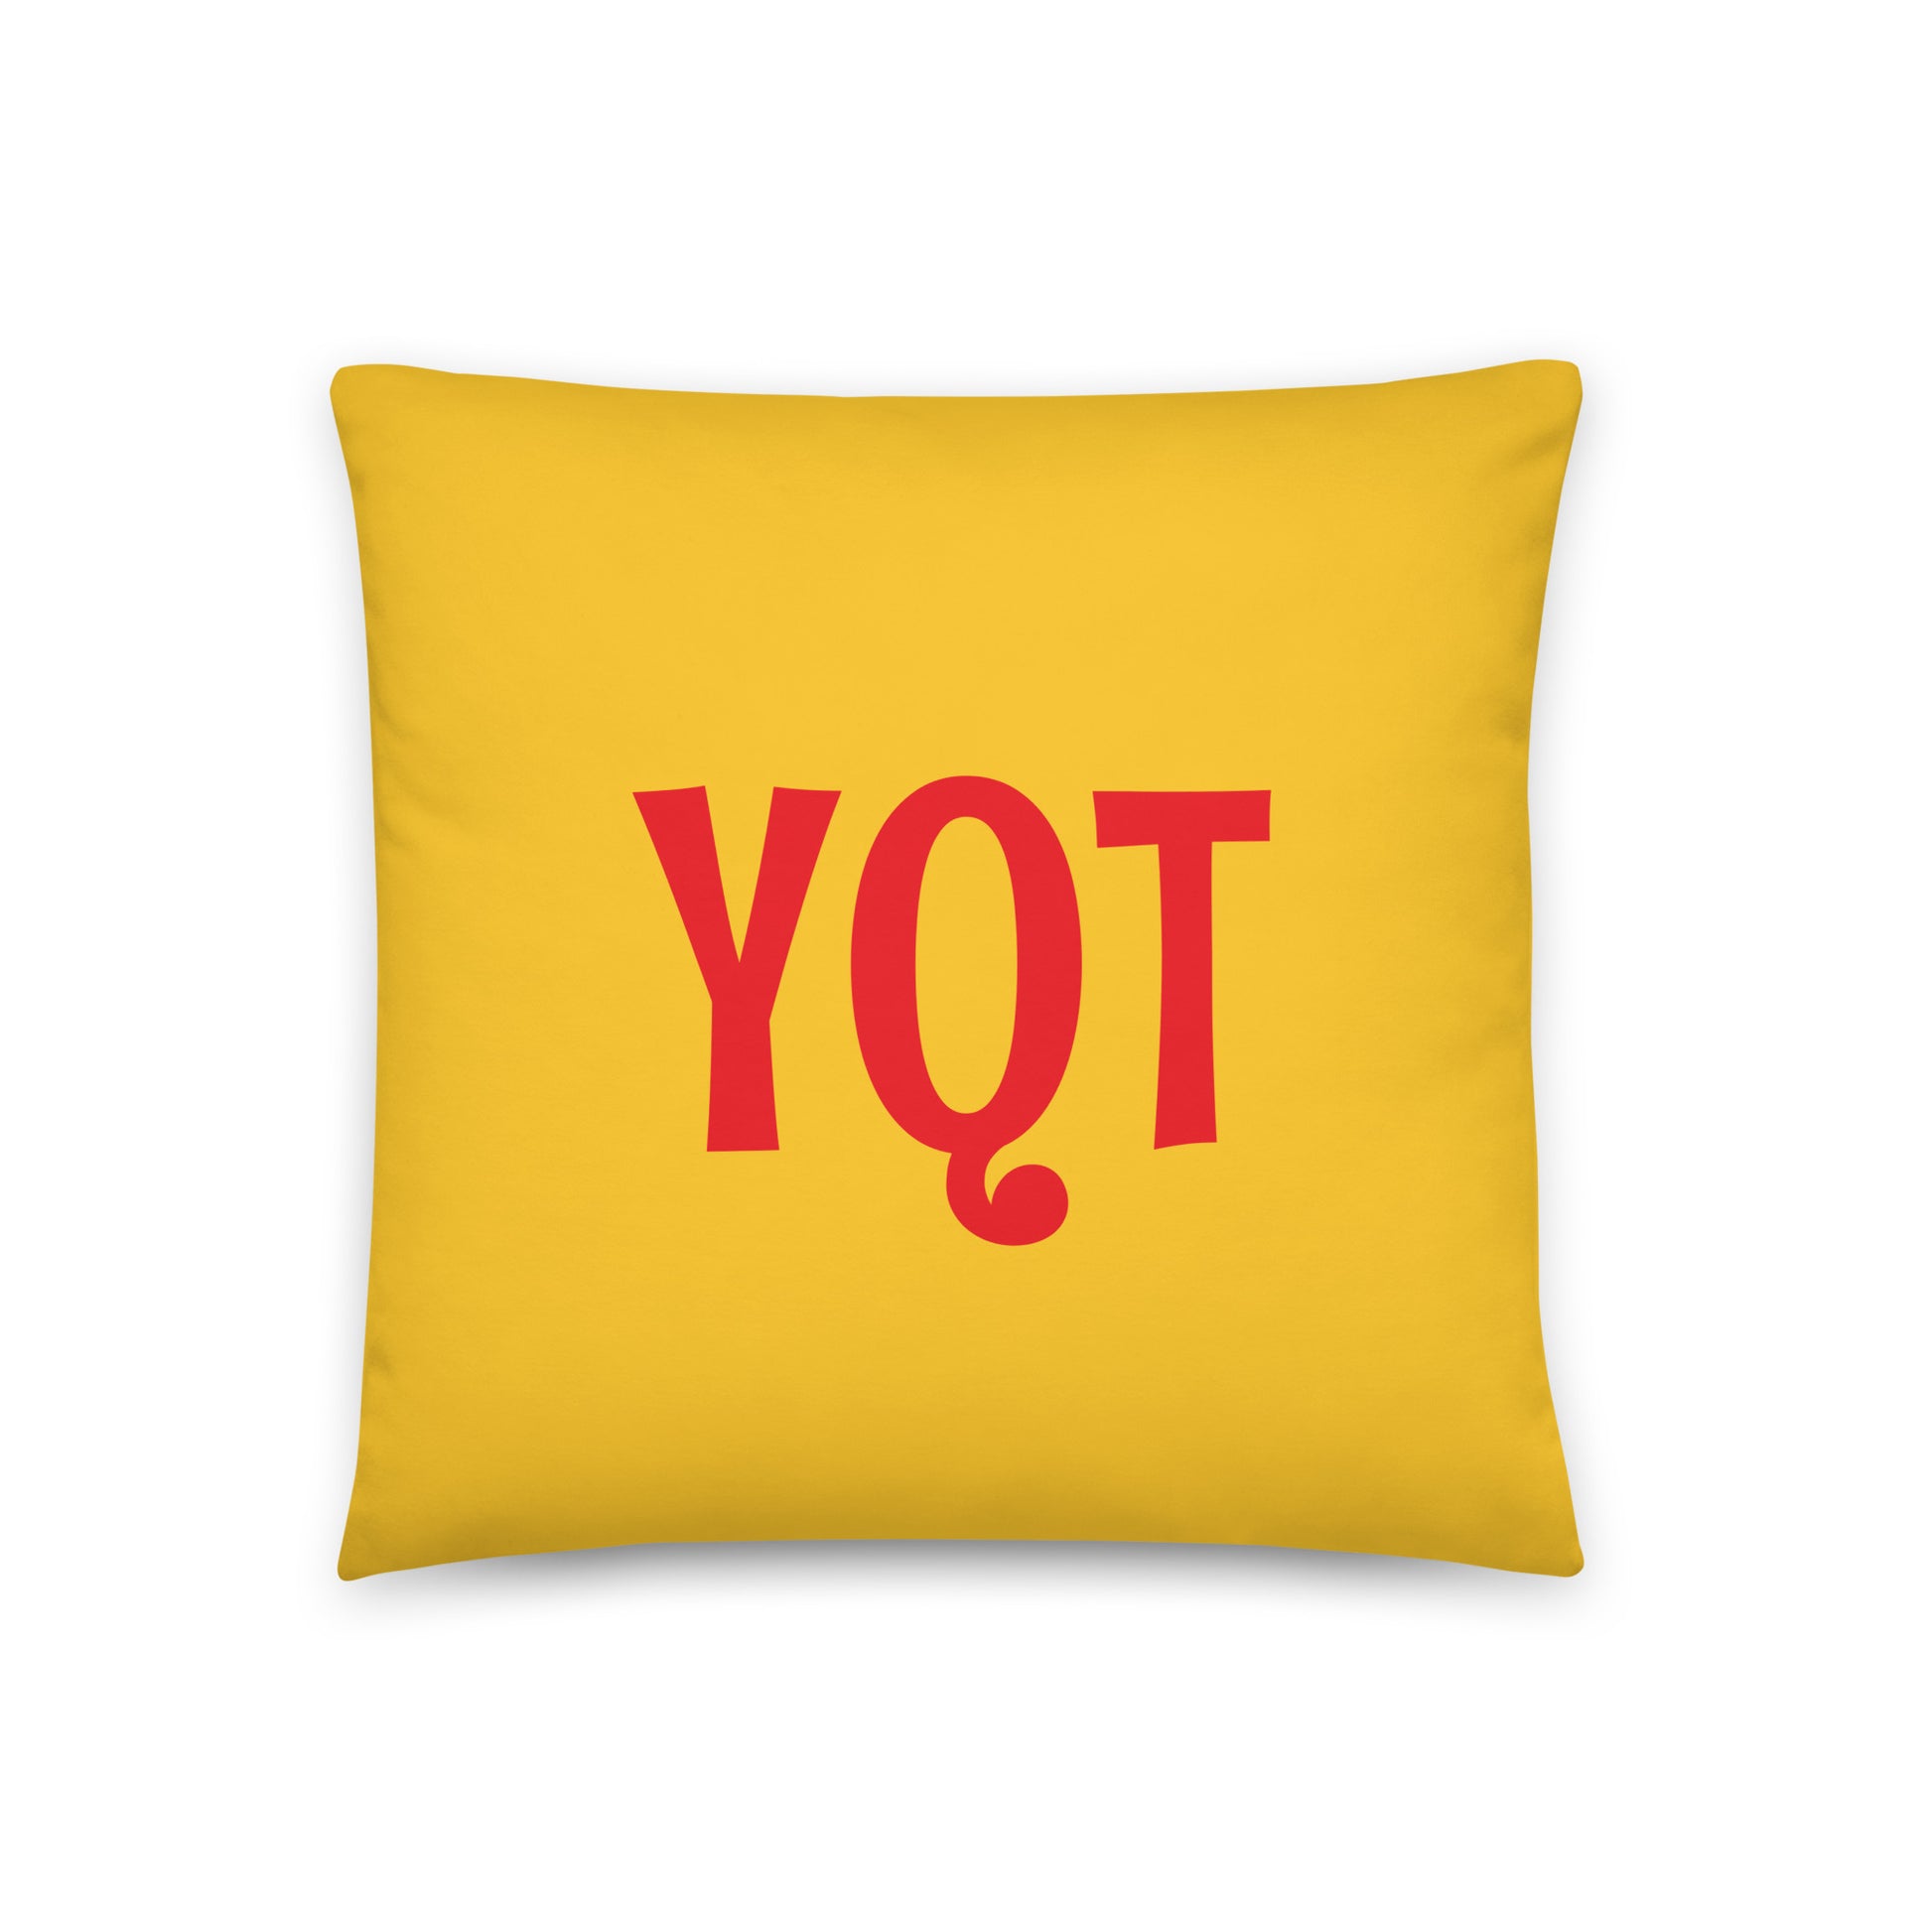 Rainbow Throw Pillow • YQT Thunder Bay • YHM Designs - Image 03